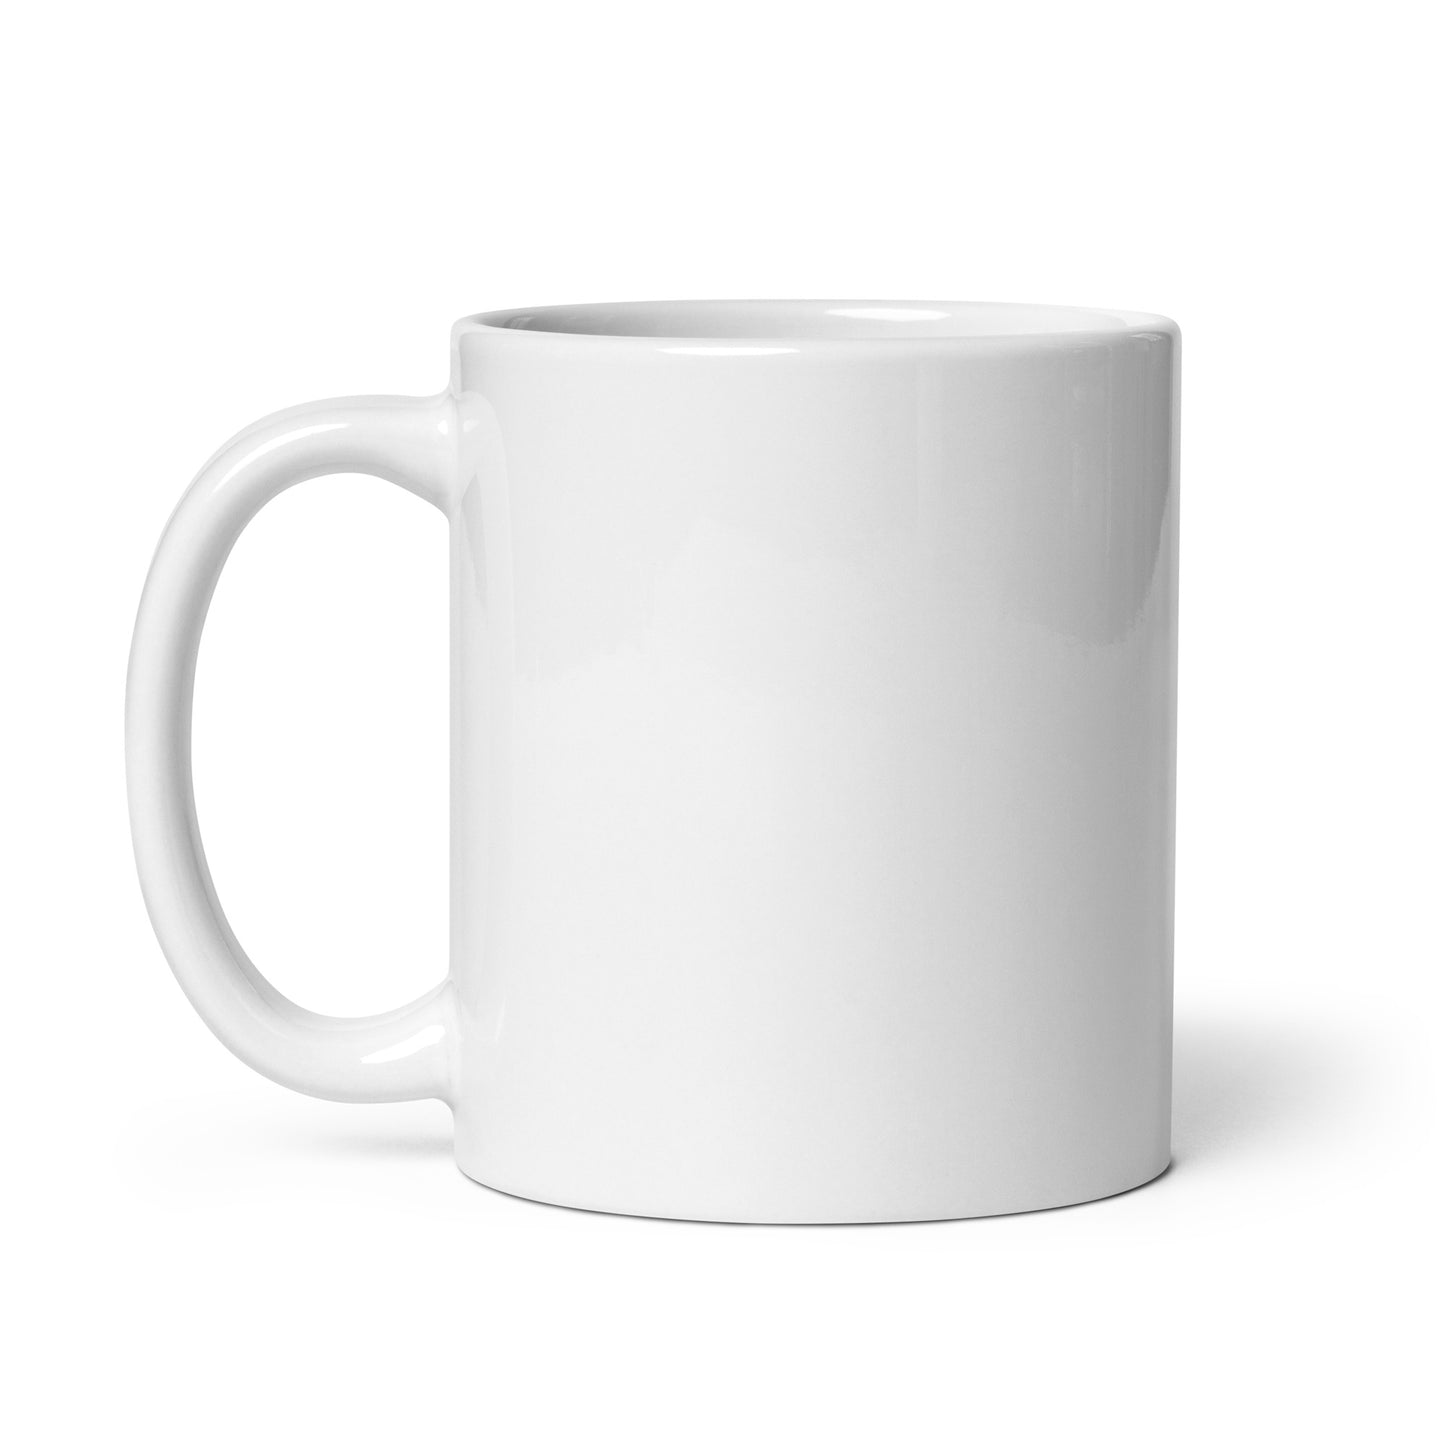 "Self Care" White Glossy Mug